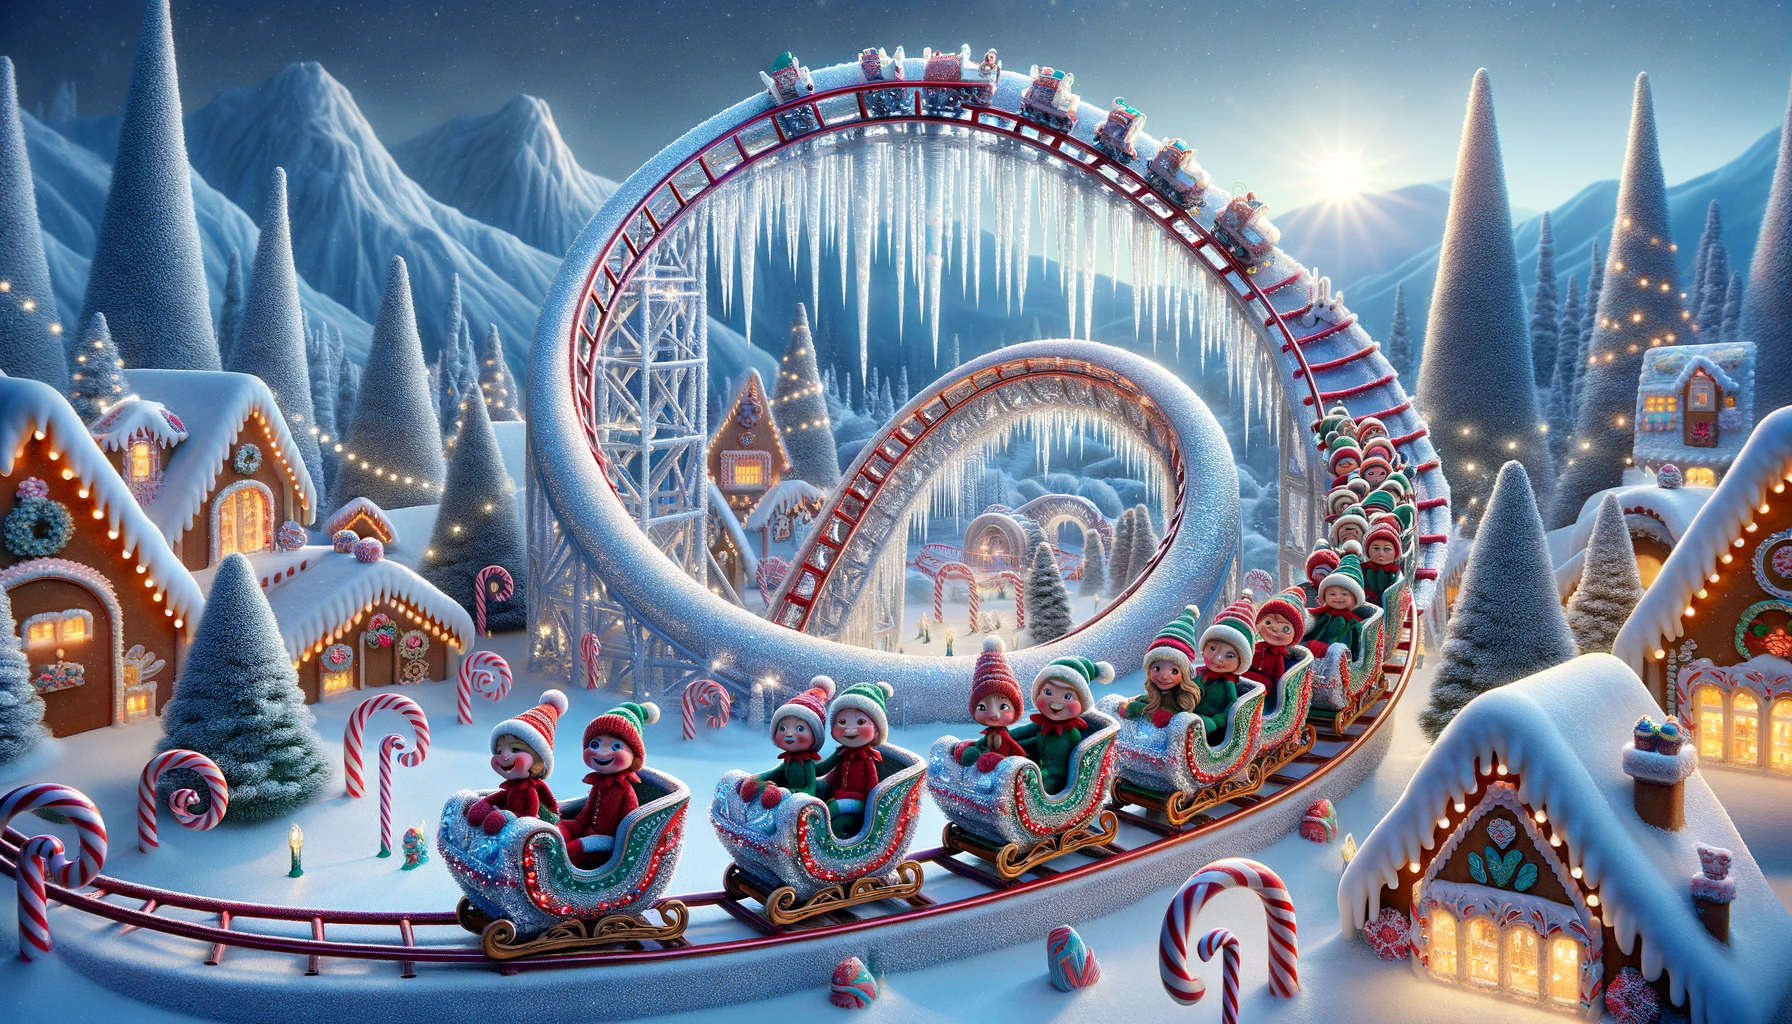 In the winter wonderland, Santa's elves call their ride the Snow Coaster - Roller Coaster Pun